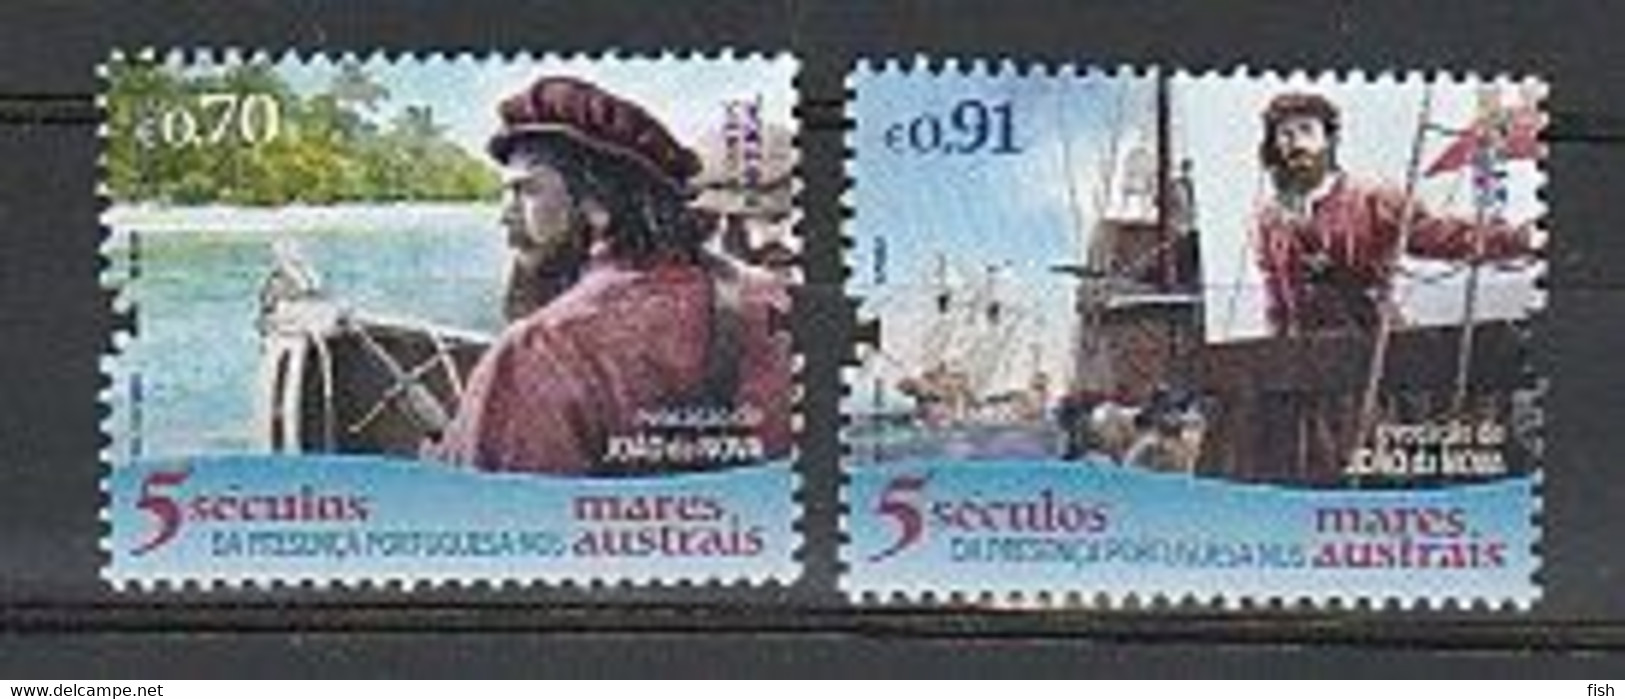 Portugal ** & V Centuries Portuguese Presence In The Austral Seas, João Da Nova Evocation 2021 (77763) - Unused Stamps